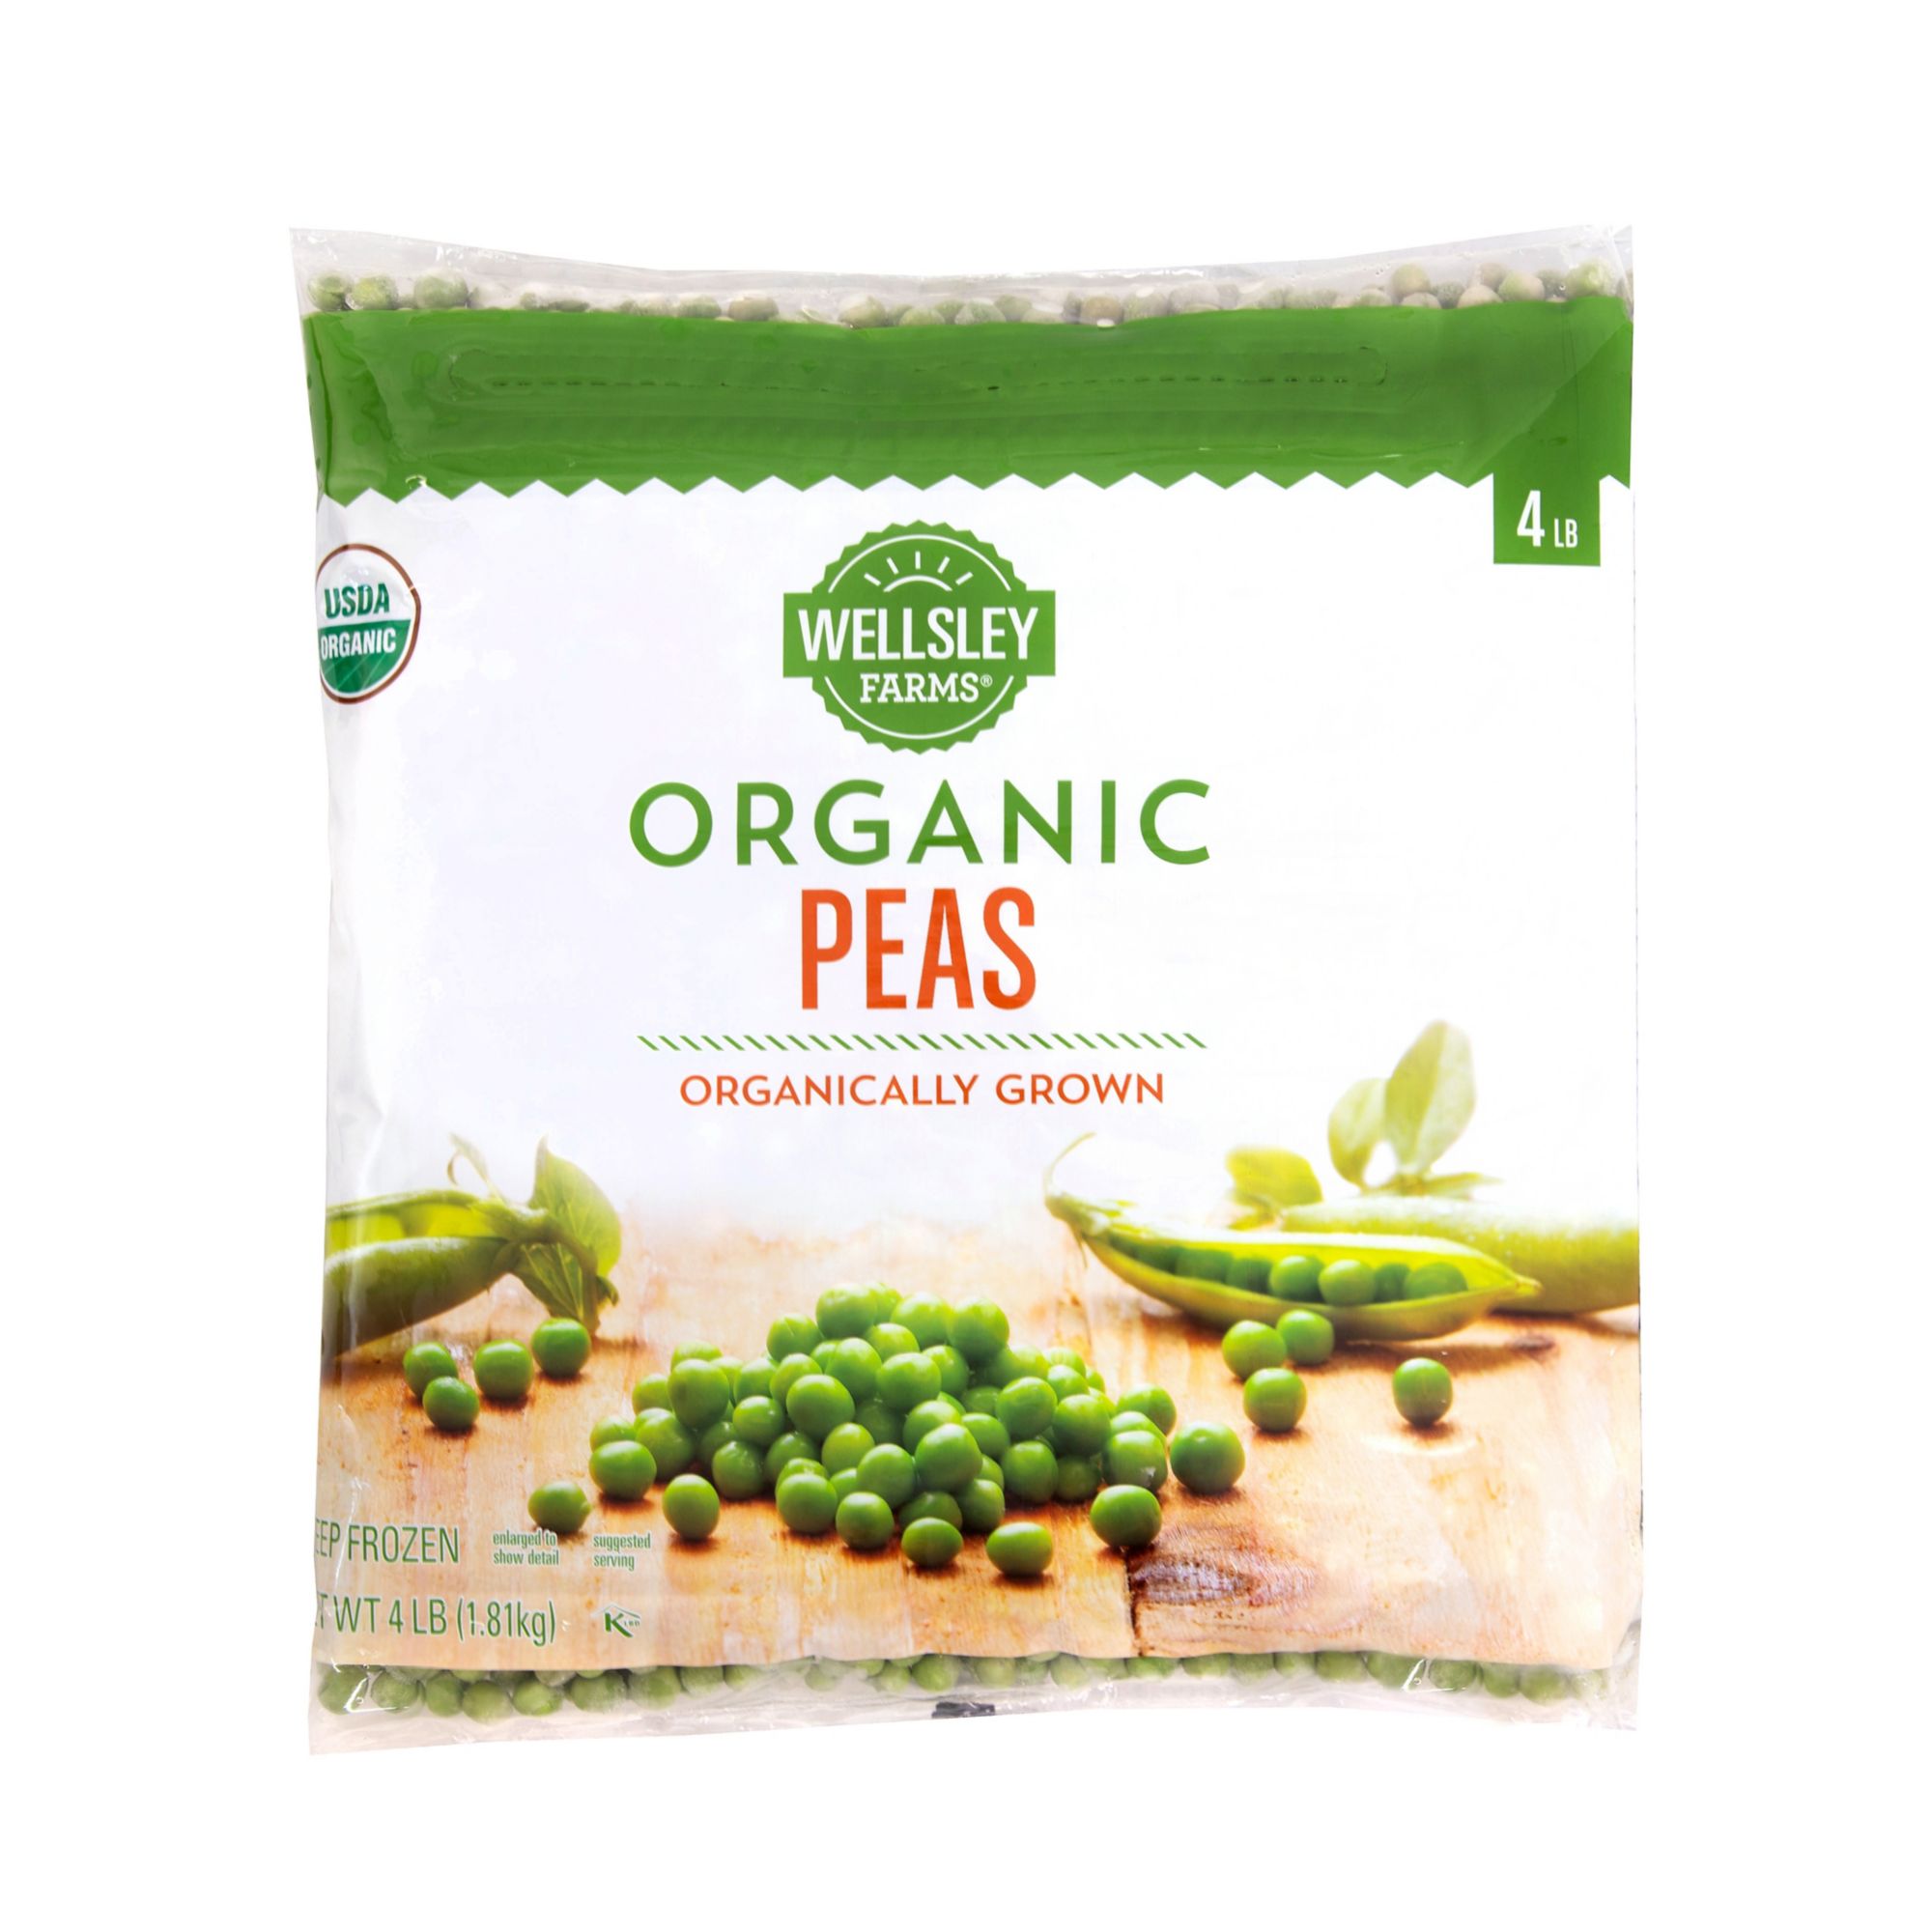 Wellsley Farms Organic Peas, 4 lbs.